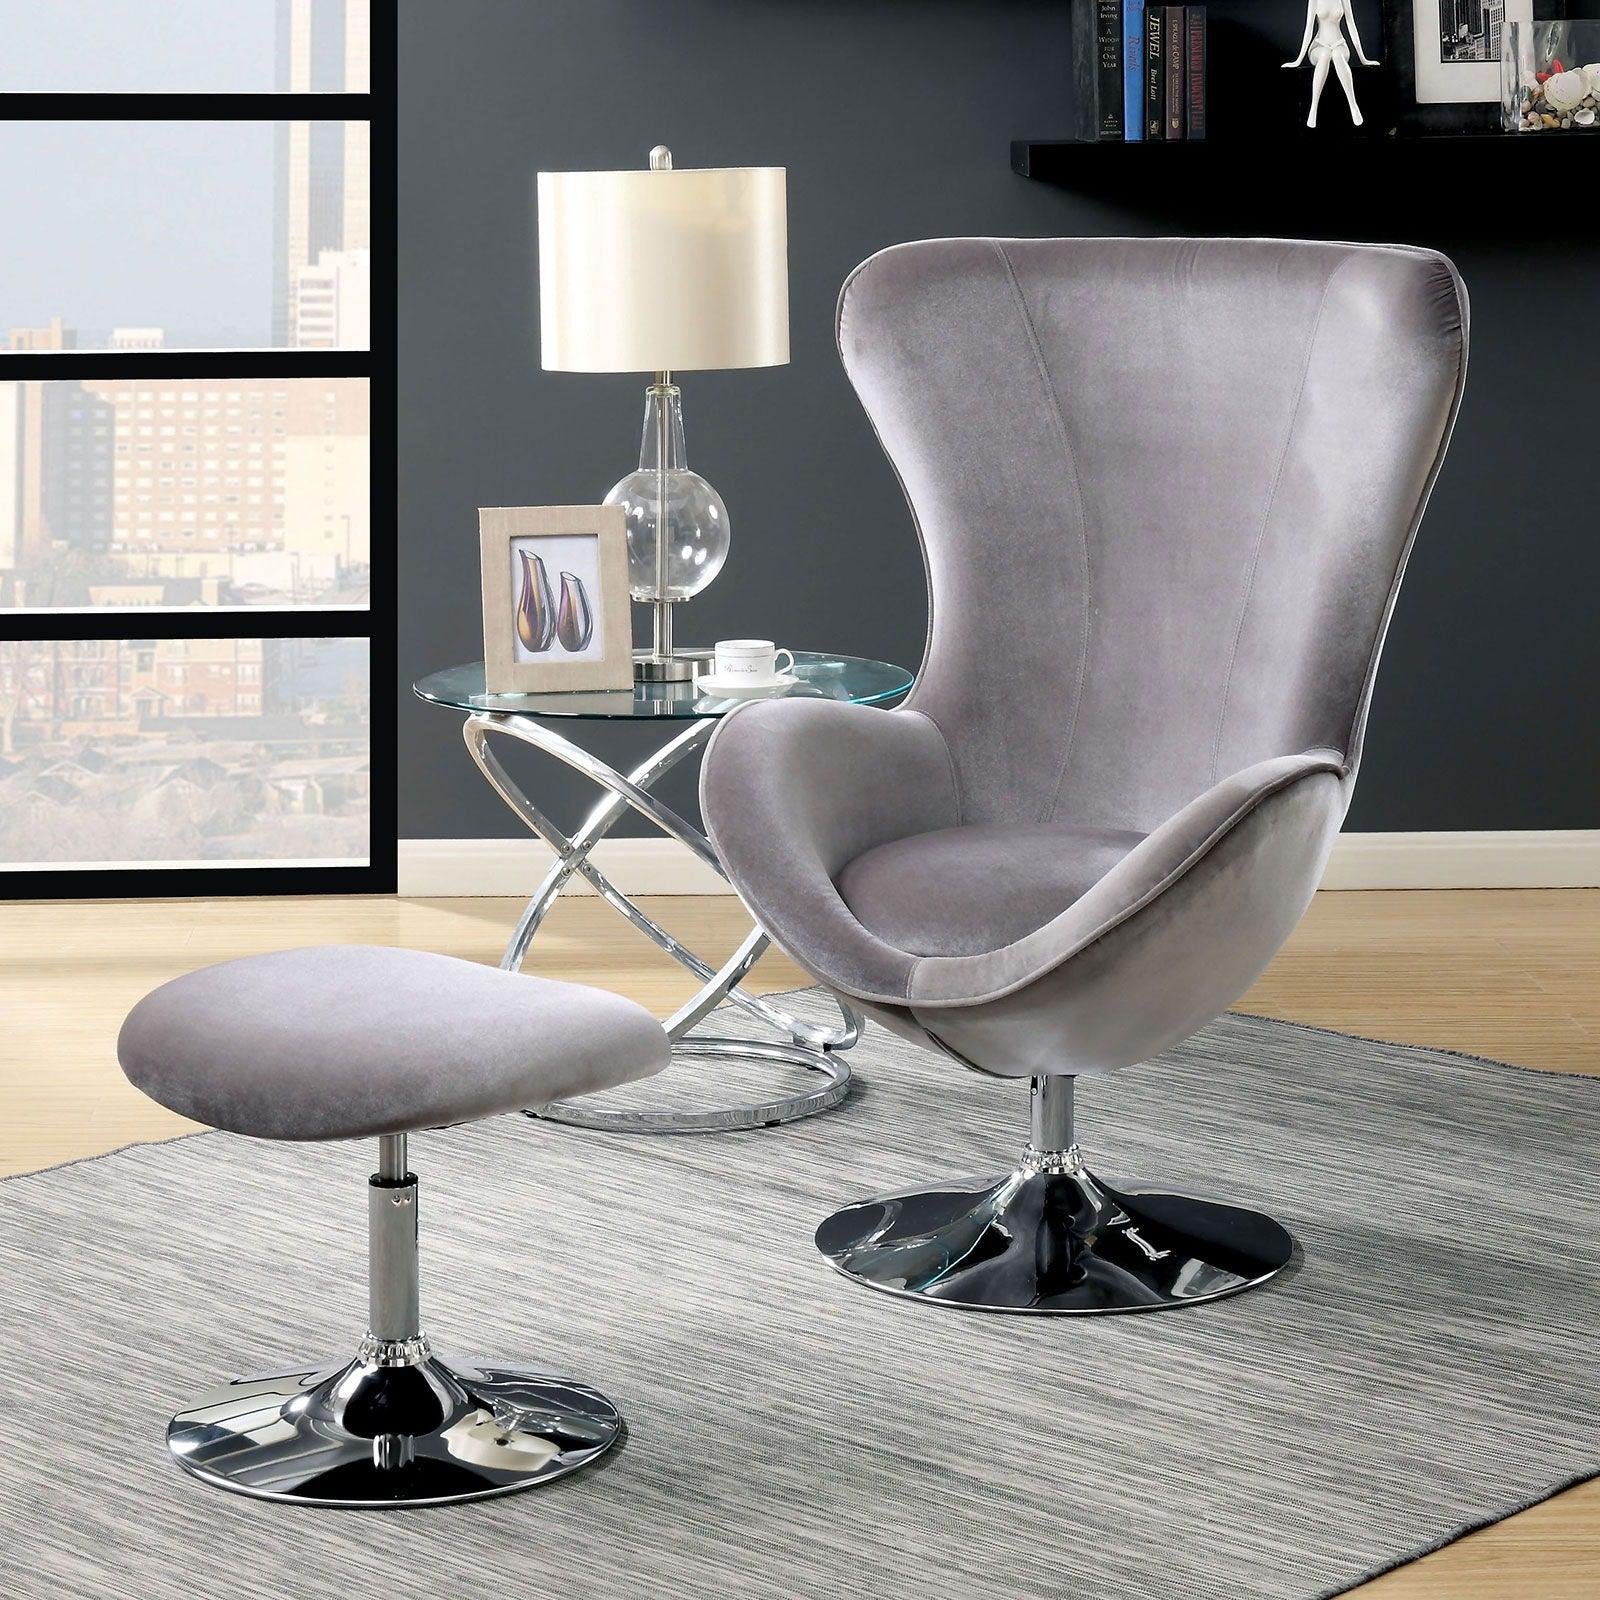 Furniture of America - Shelia - Accent Chair With Ottoman - Gray - 5th Avenue Furniture